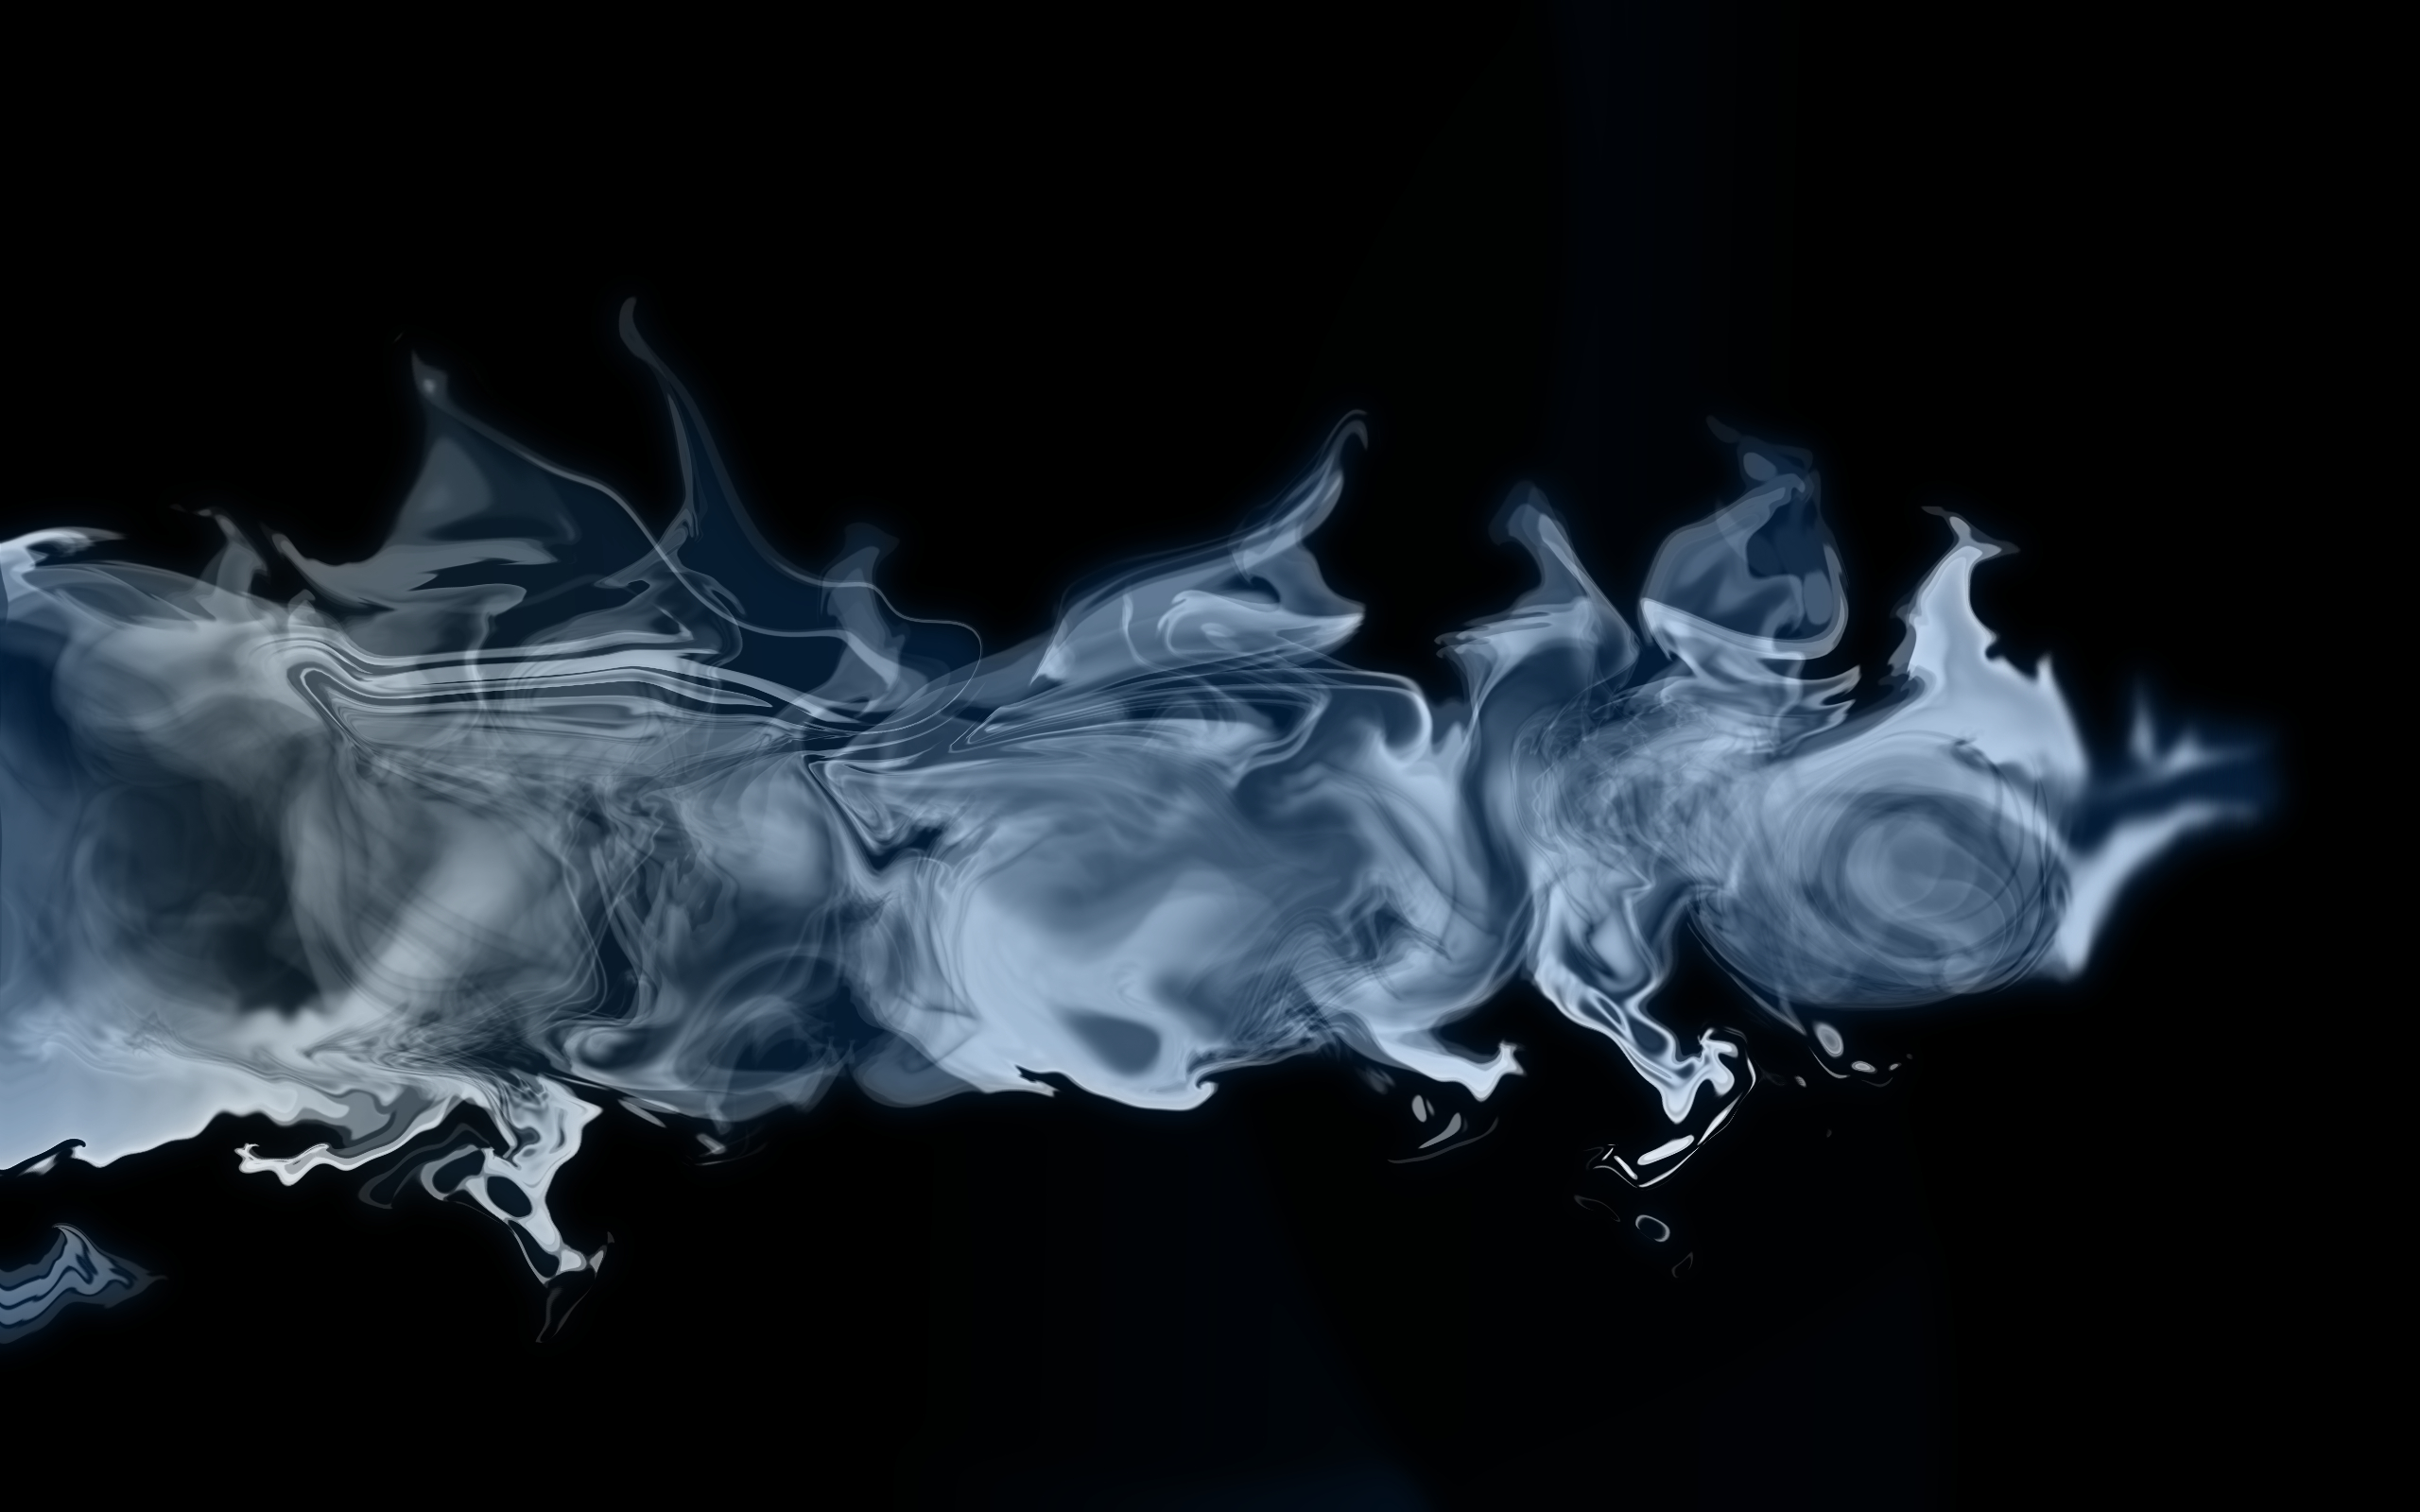 Smoke Full HD Wallpaper and Background Image | 2560x1600 | ID:104692